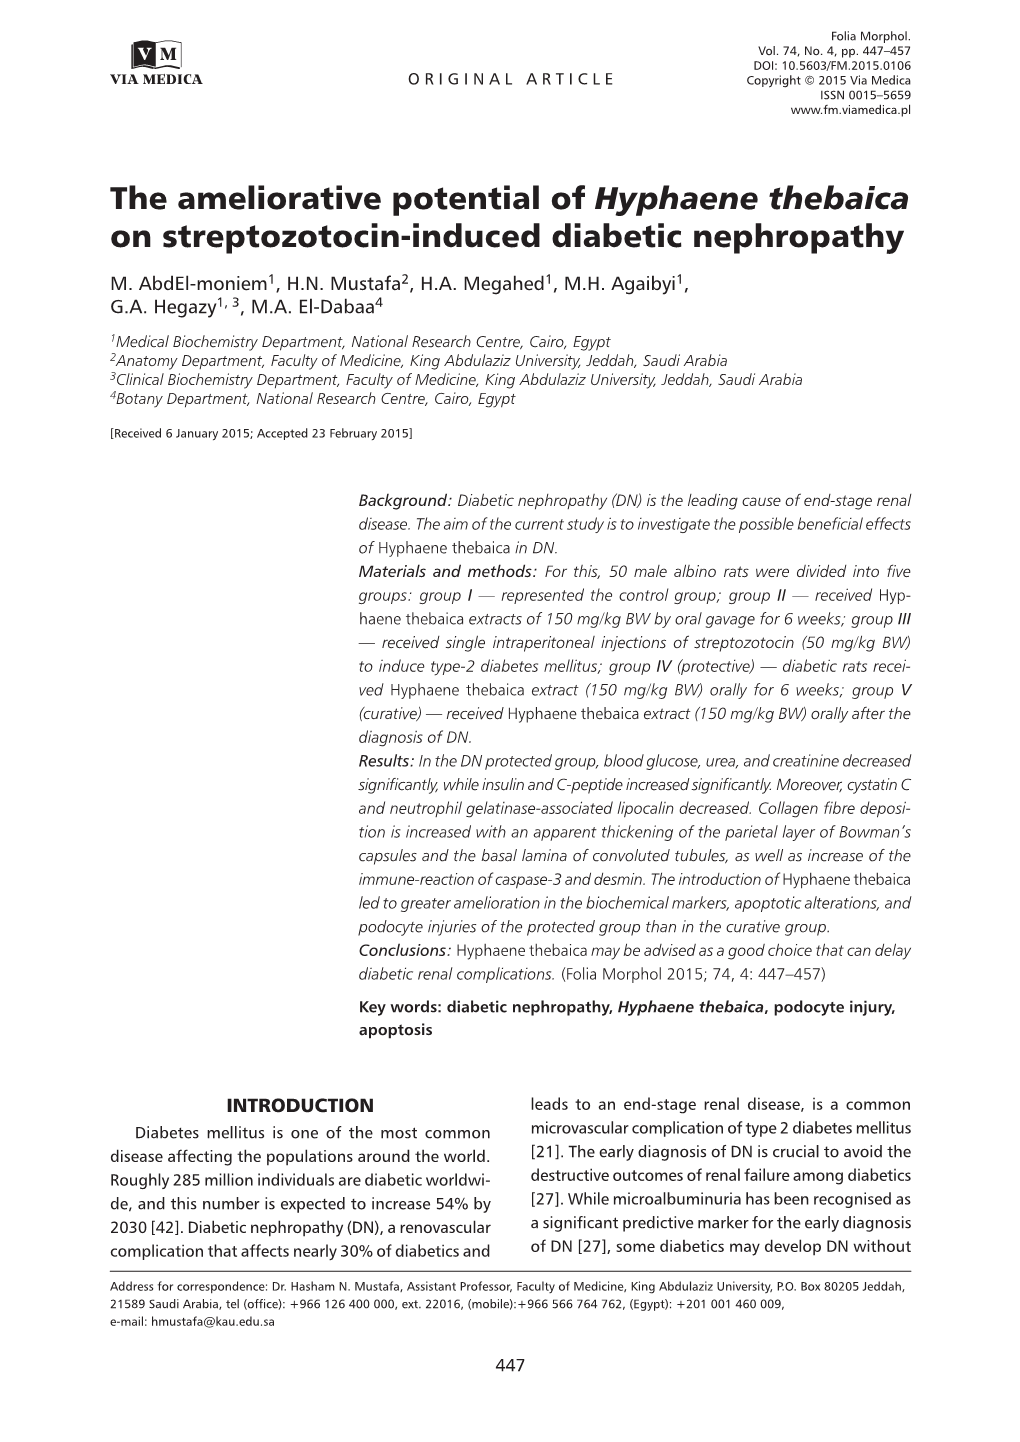 Hyphaene Thebaica on Streptozotocin-Induced Diabetic Nephropathy M